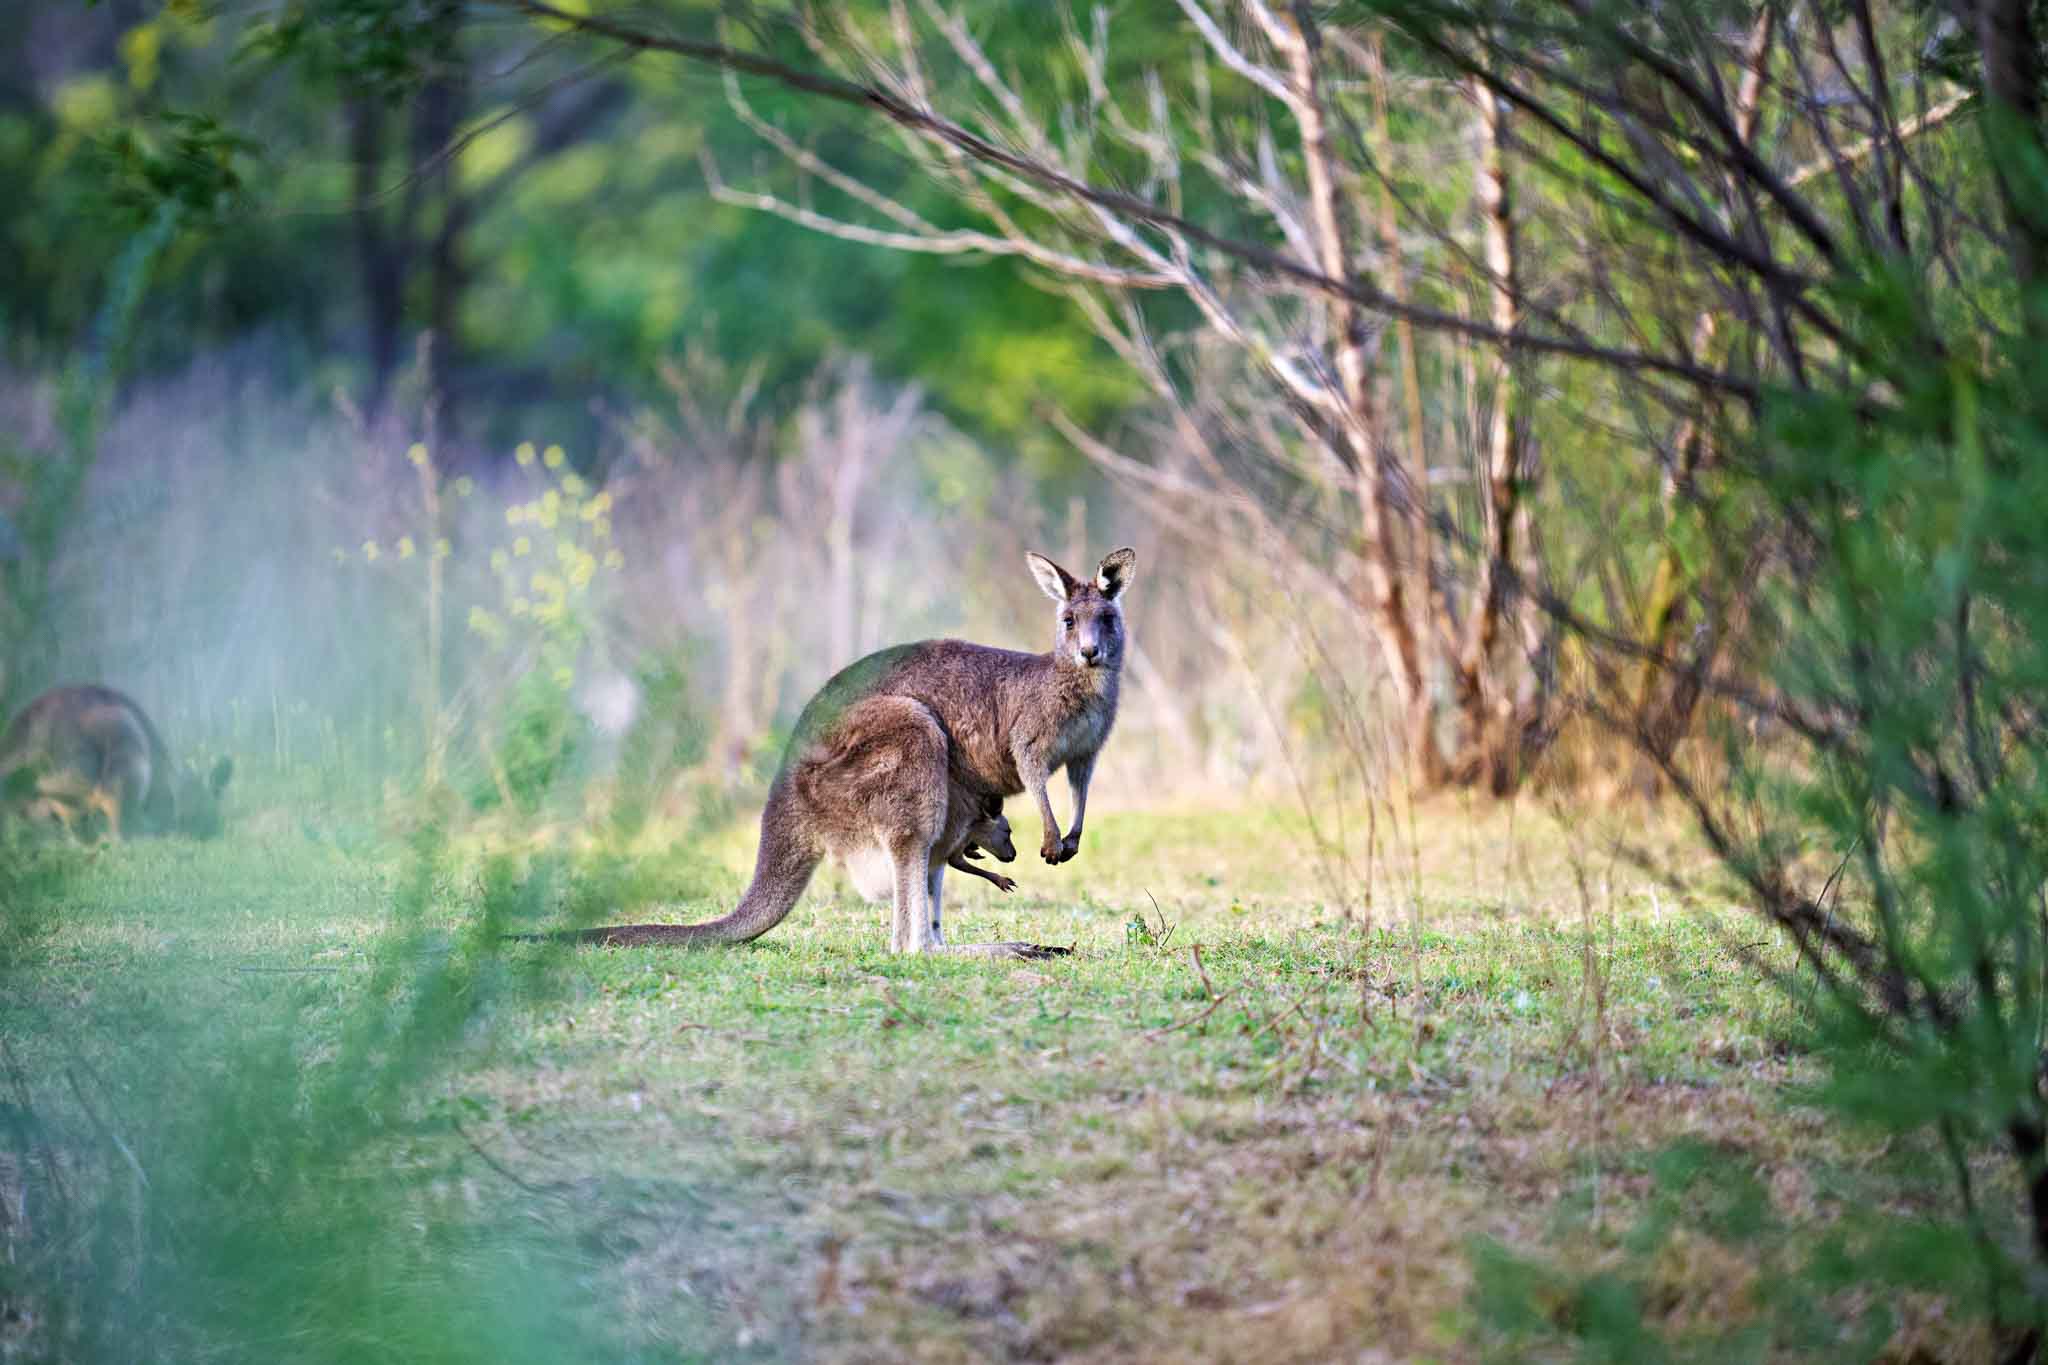 a kangaroo in a field